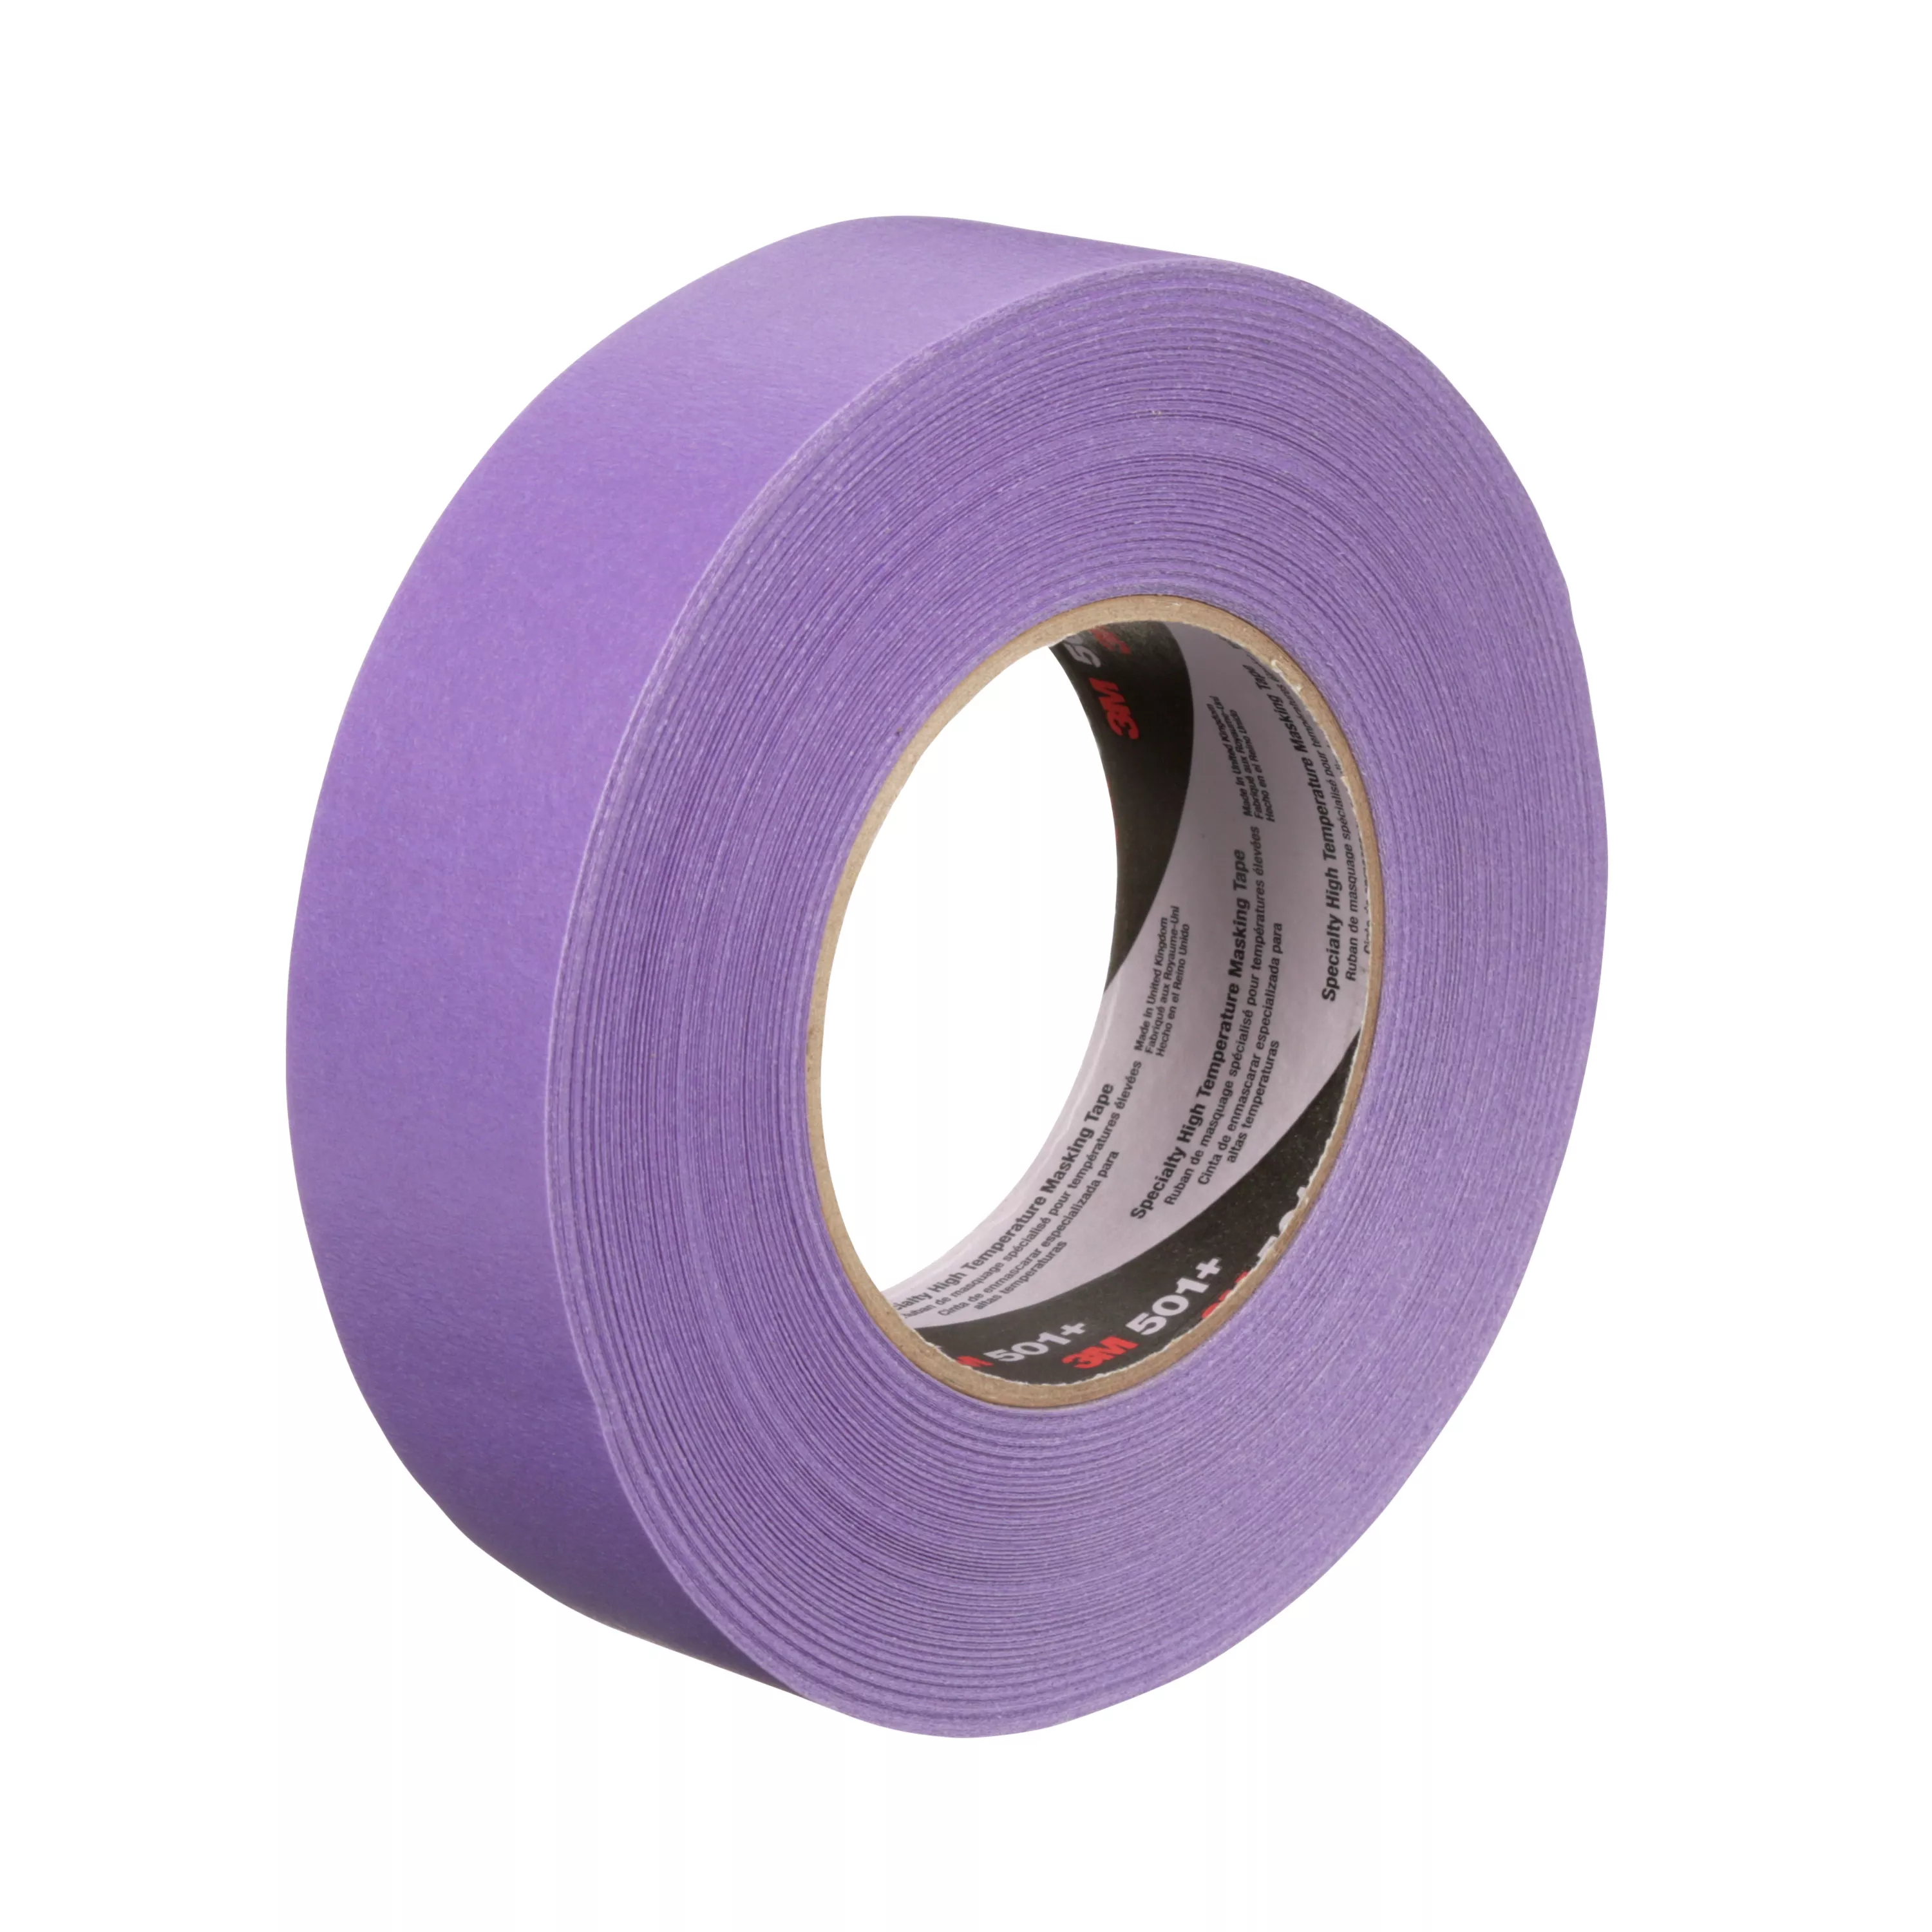 3M™ Specialty High Temperature Masking Tape 501+, Purple, 36 mm x 55
m,
 6.0 mil, 24 Rolls/Case